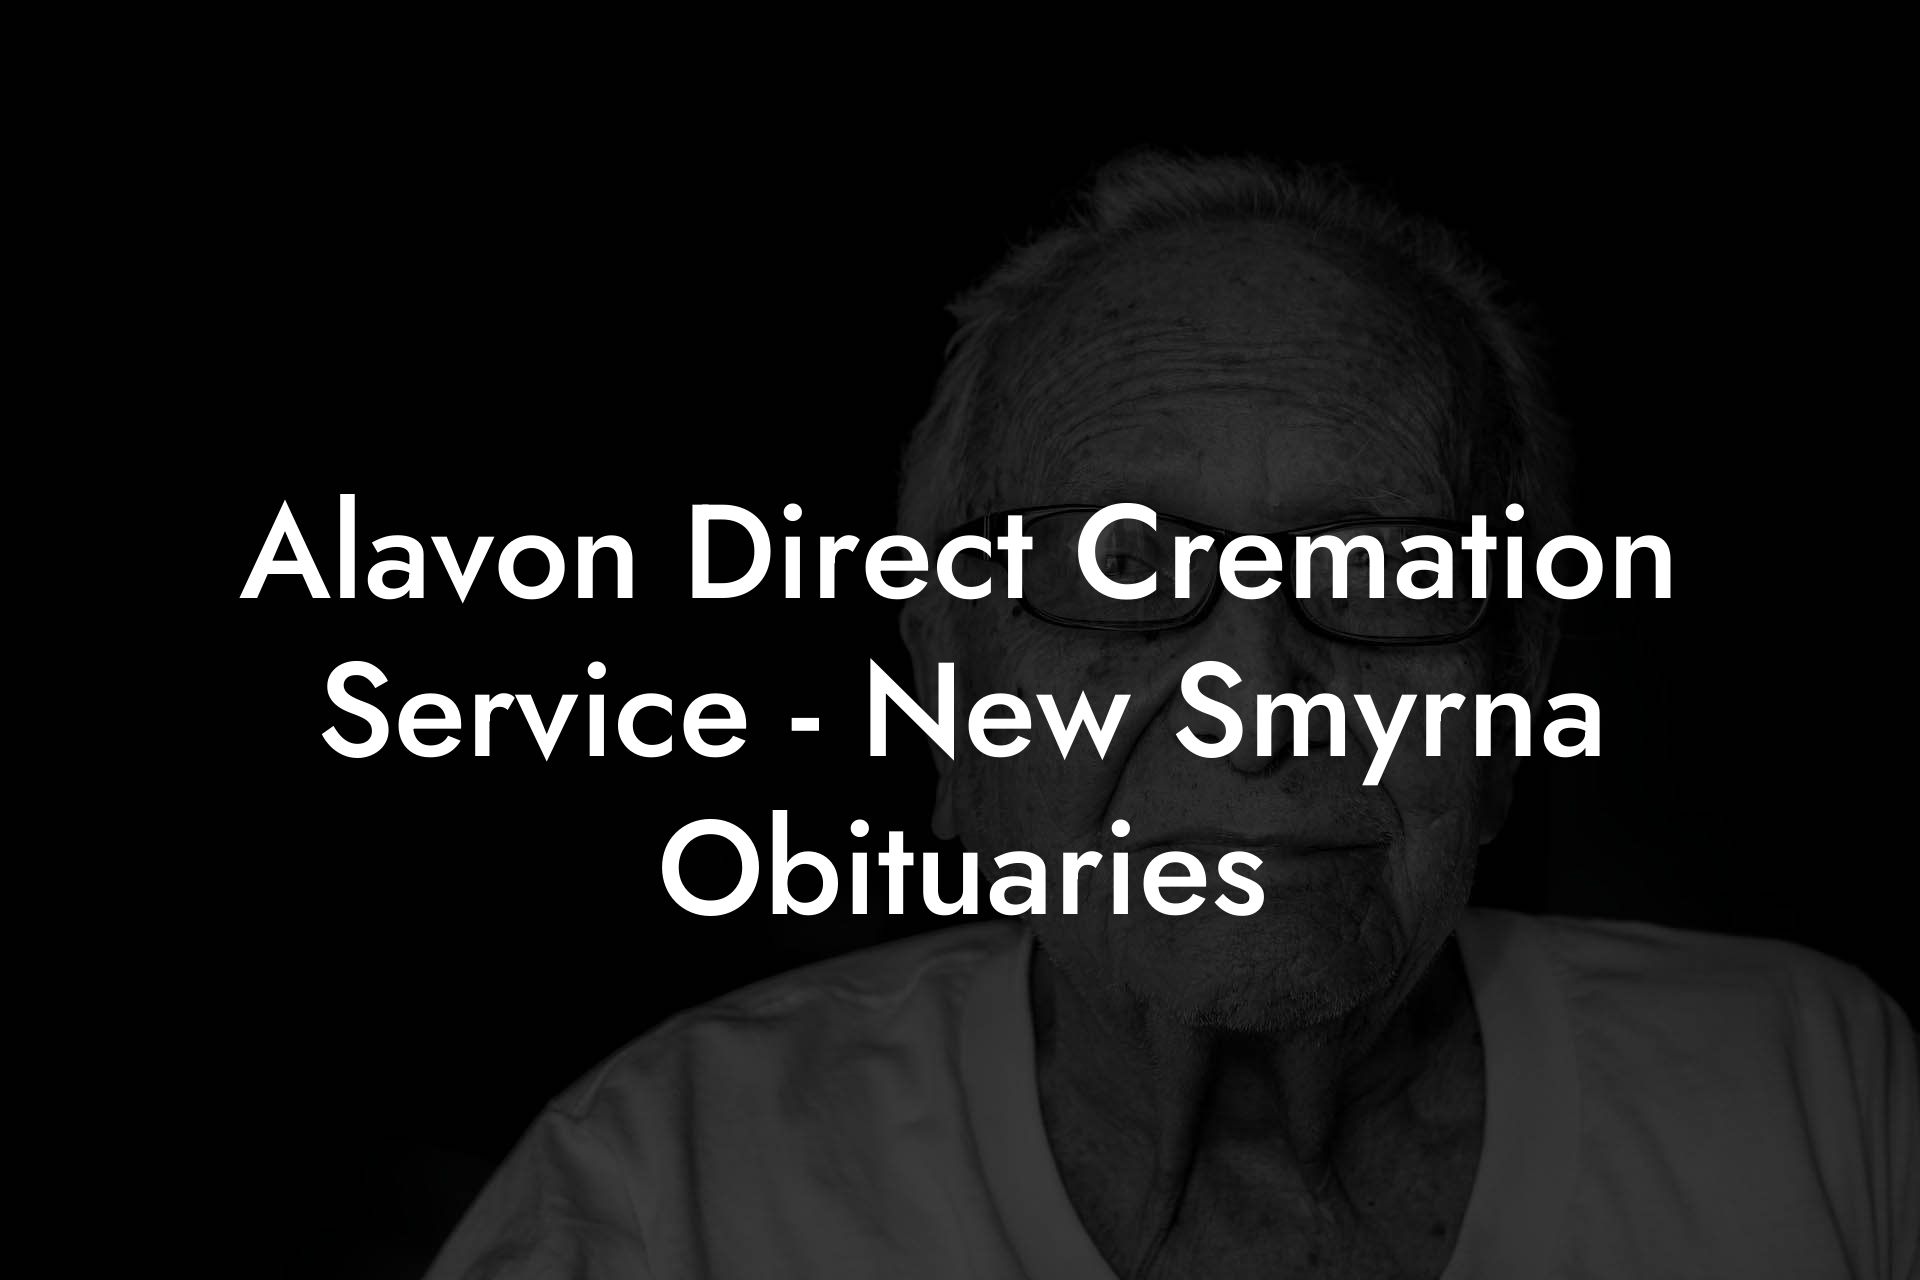 Alavon Direct Cremation Service - New Smyrna Obituaries